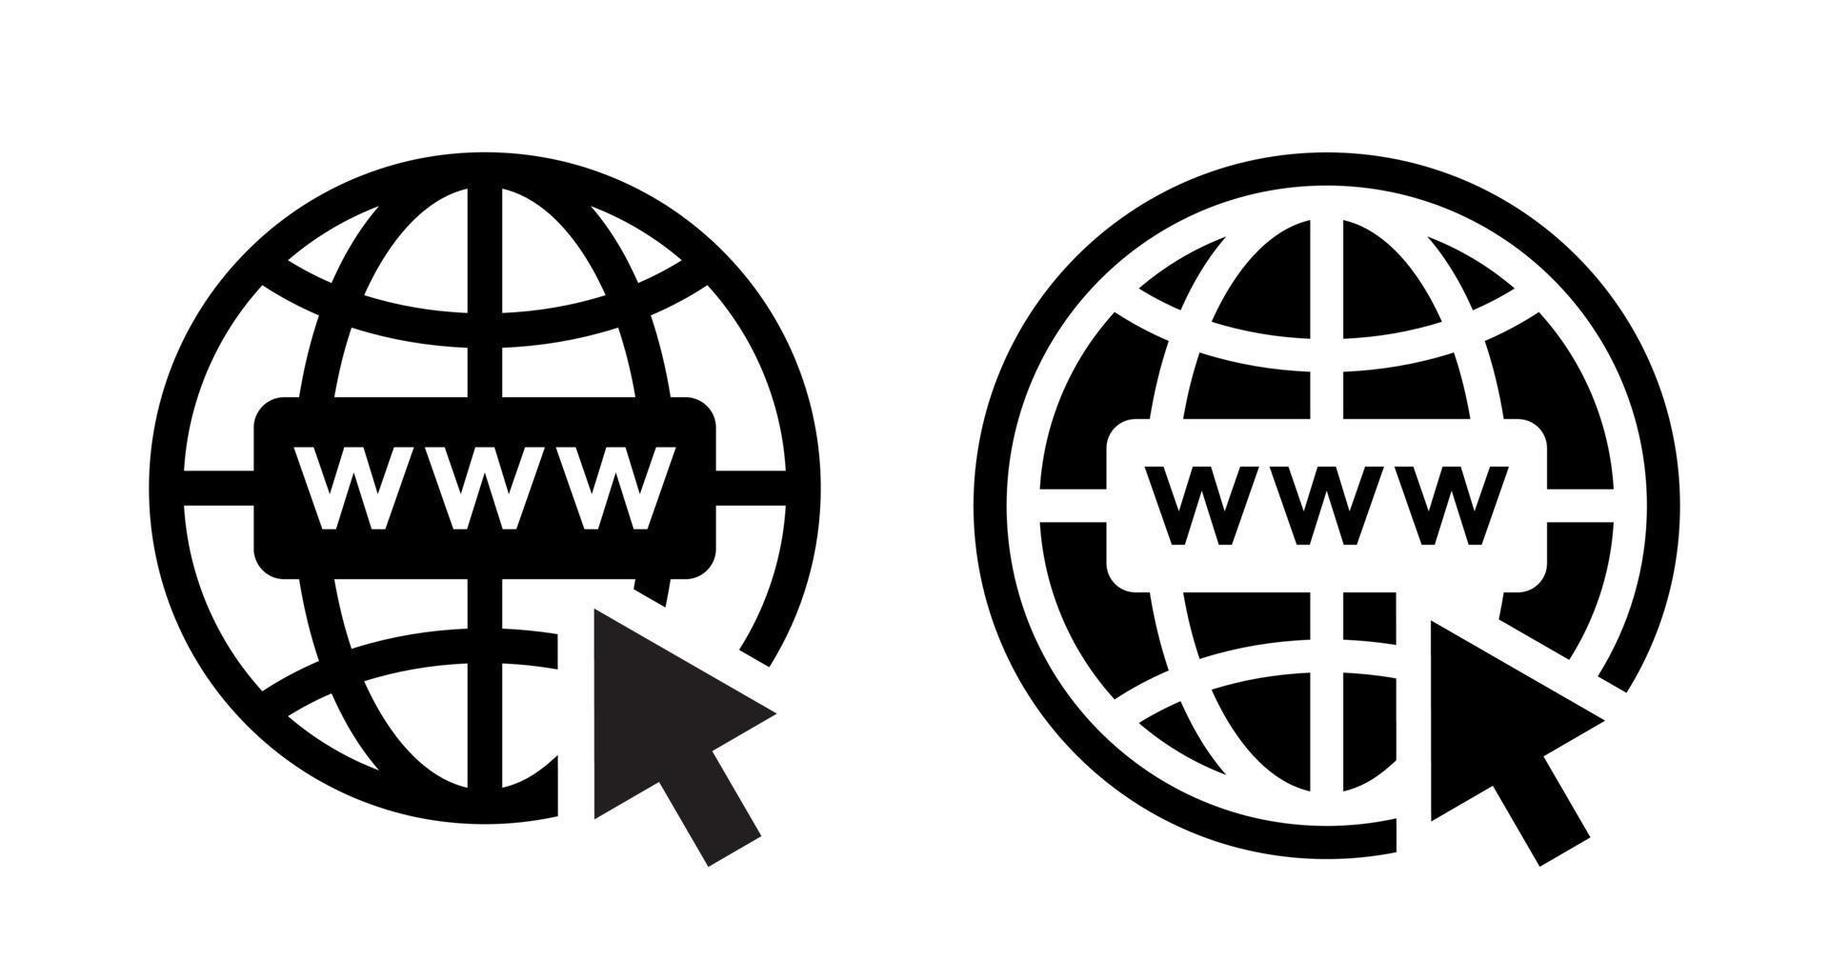 Website URL icon vector. Internet http address concept vector